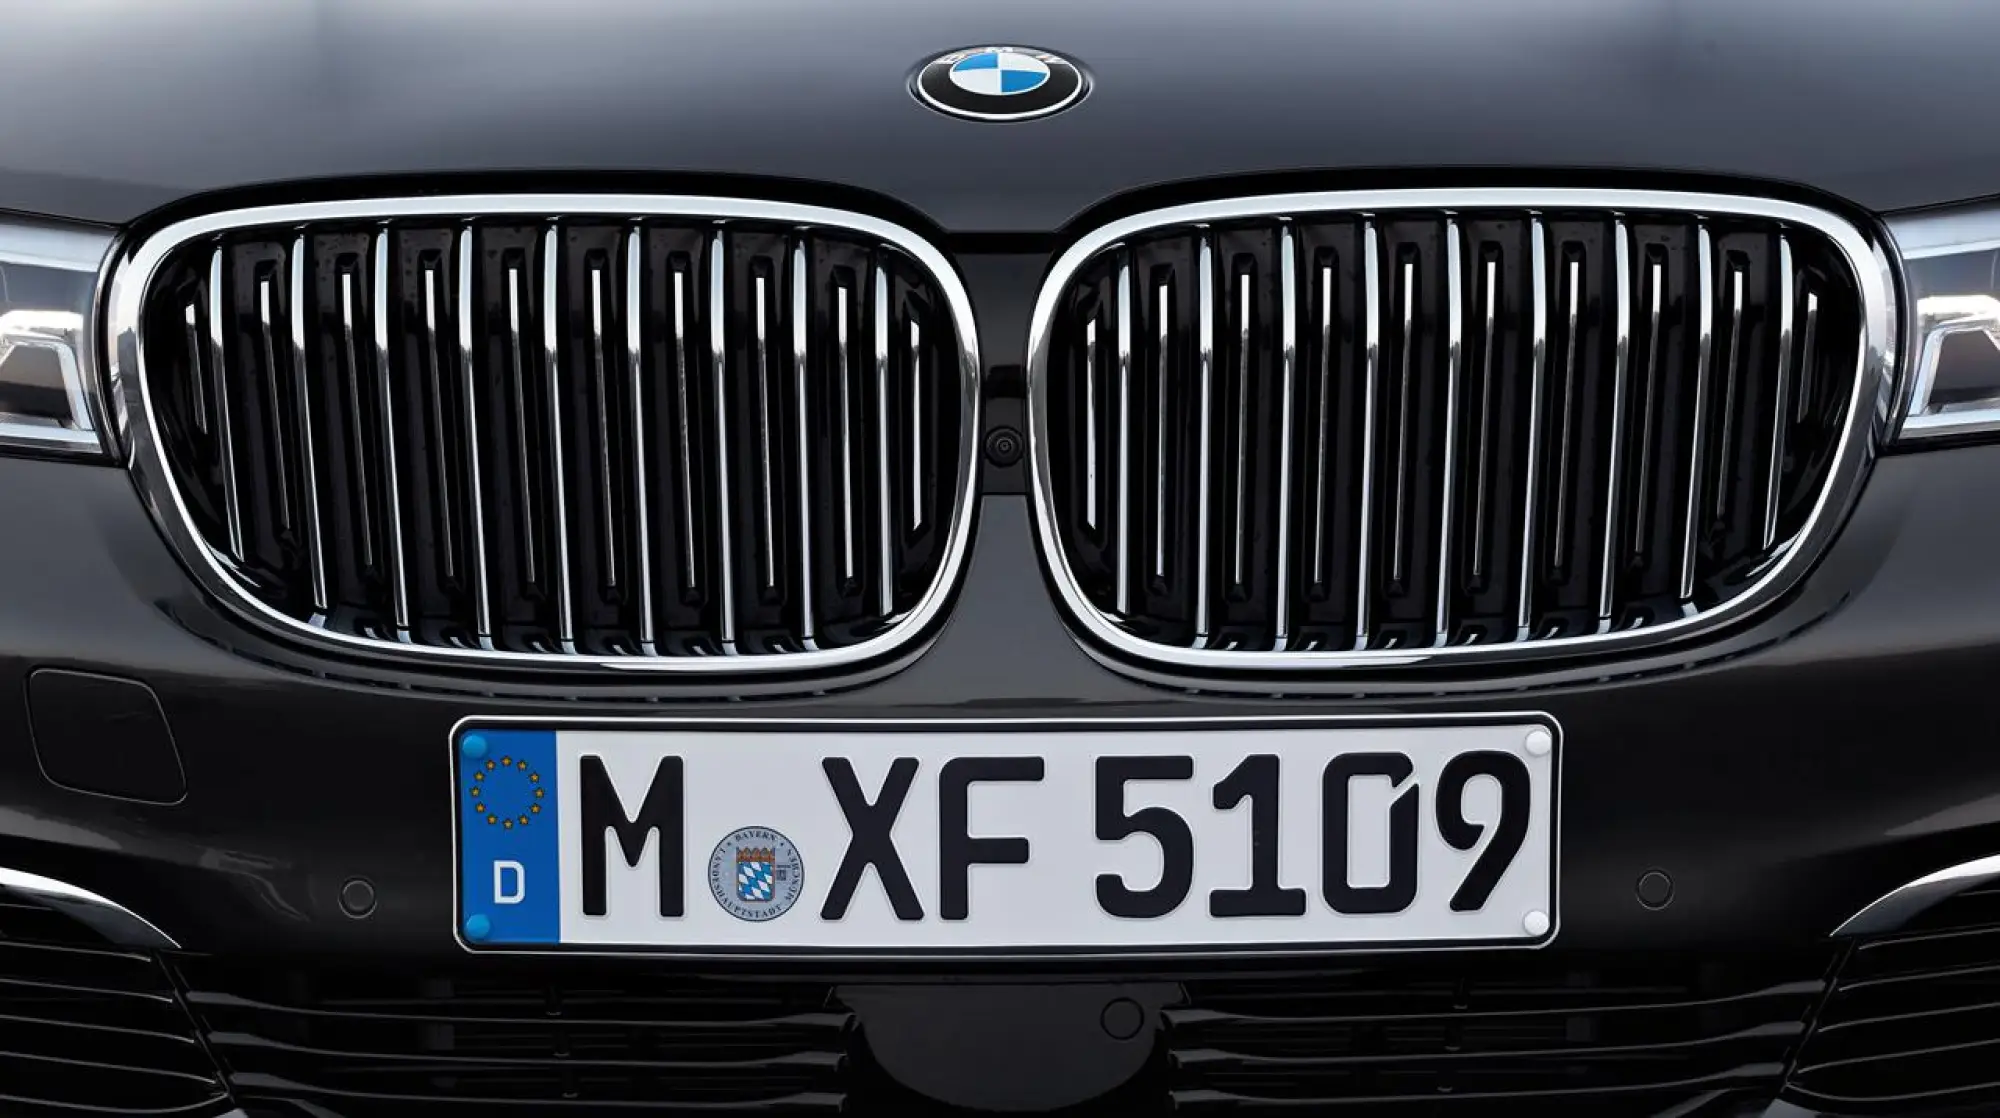 BMW Serie 7 MY 2016 - Nuove foto ufficiali - 27